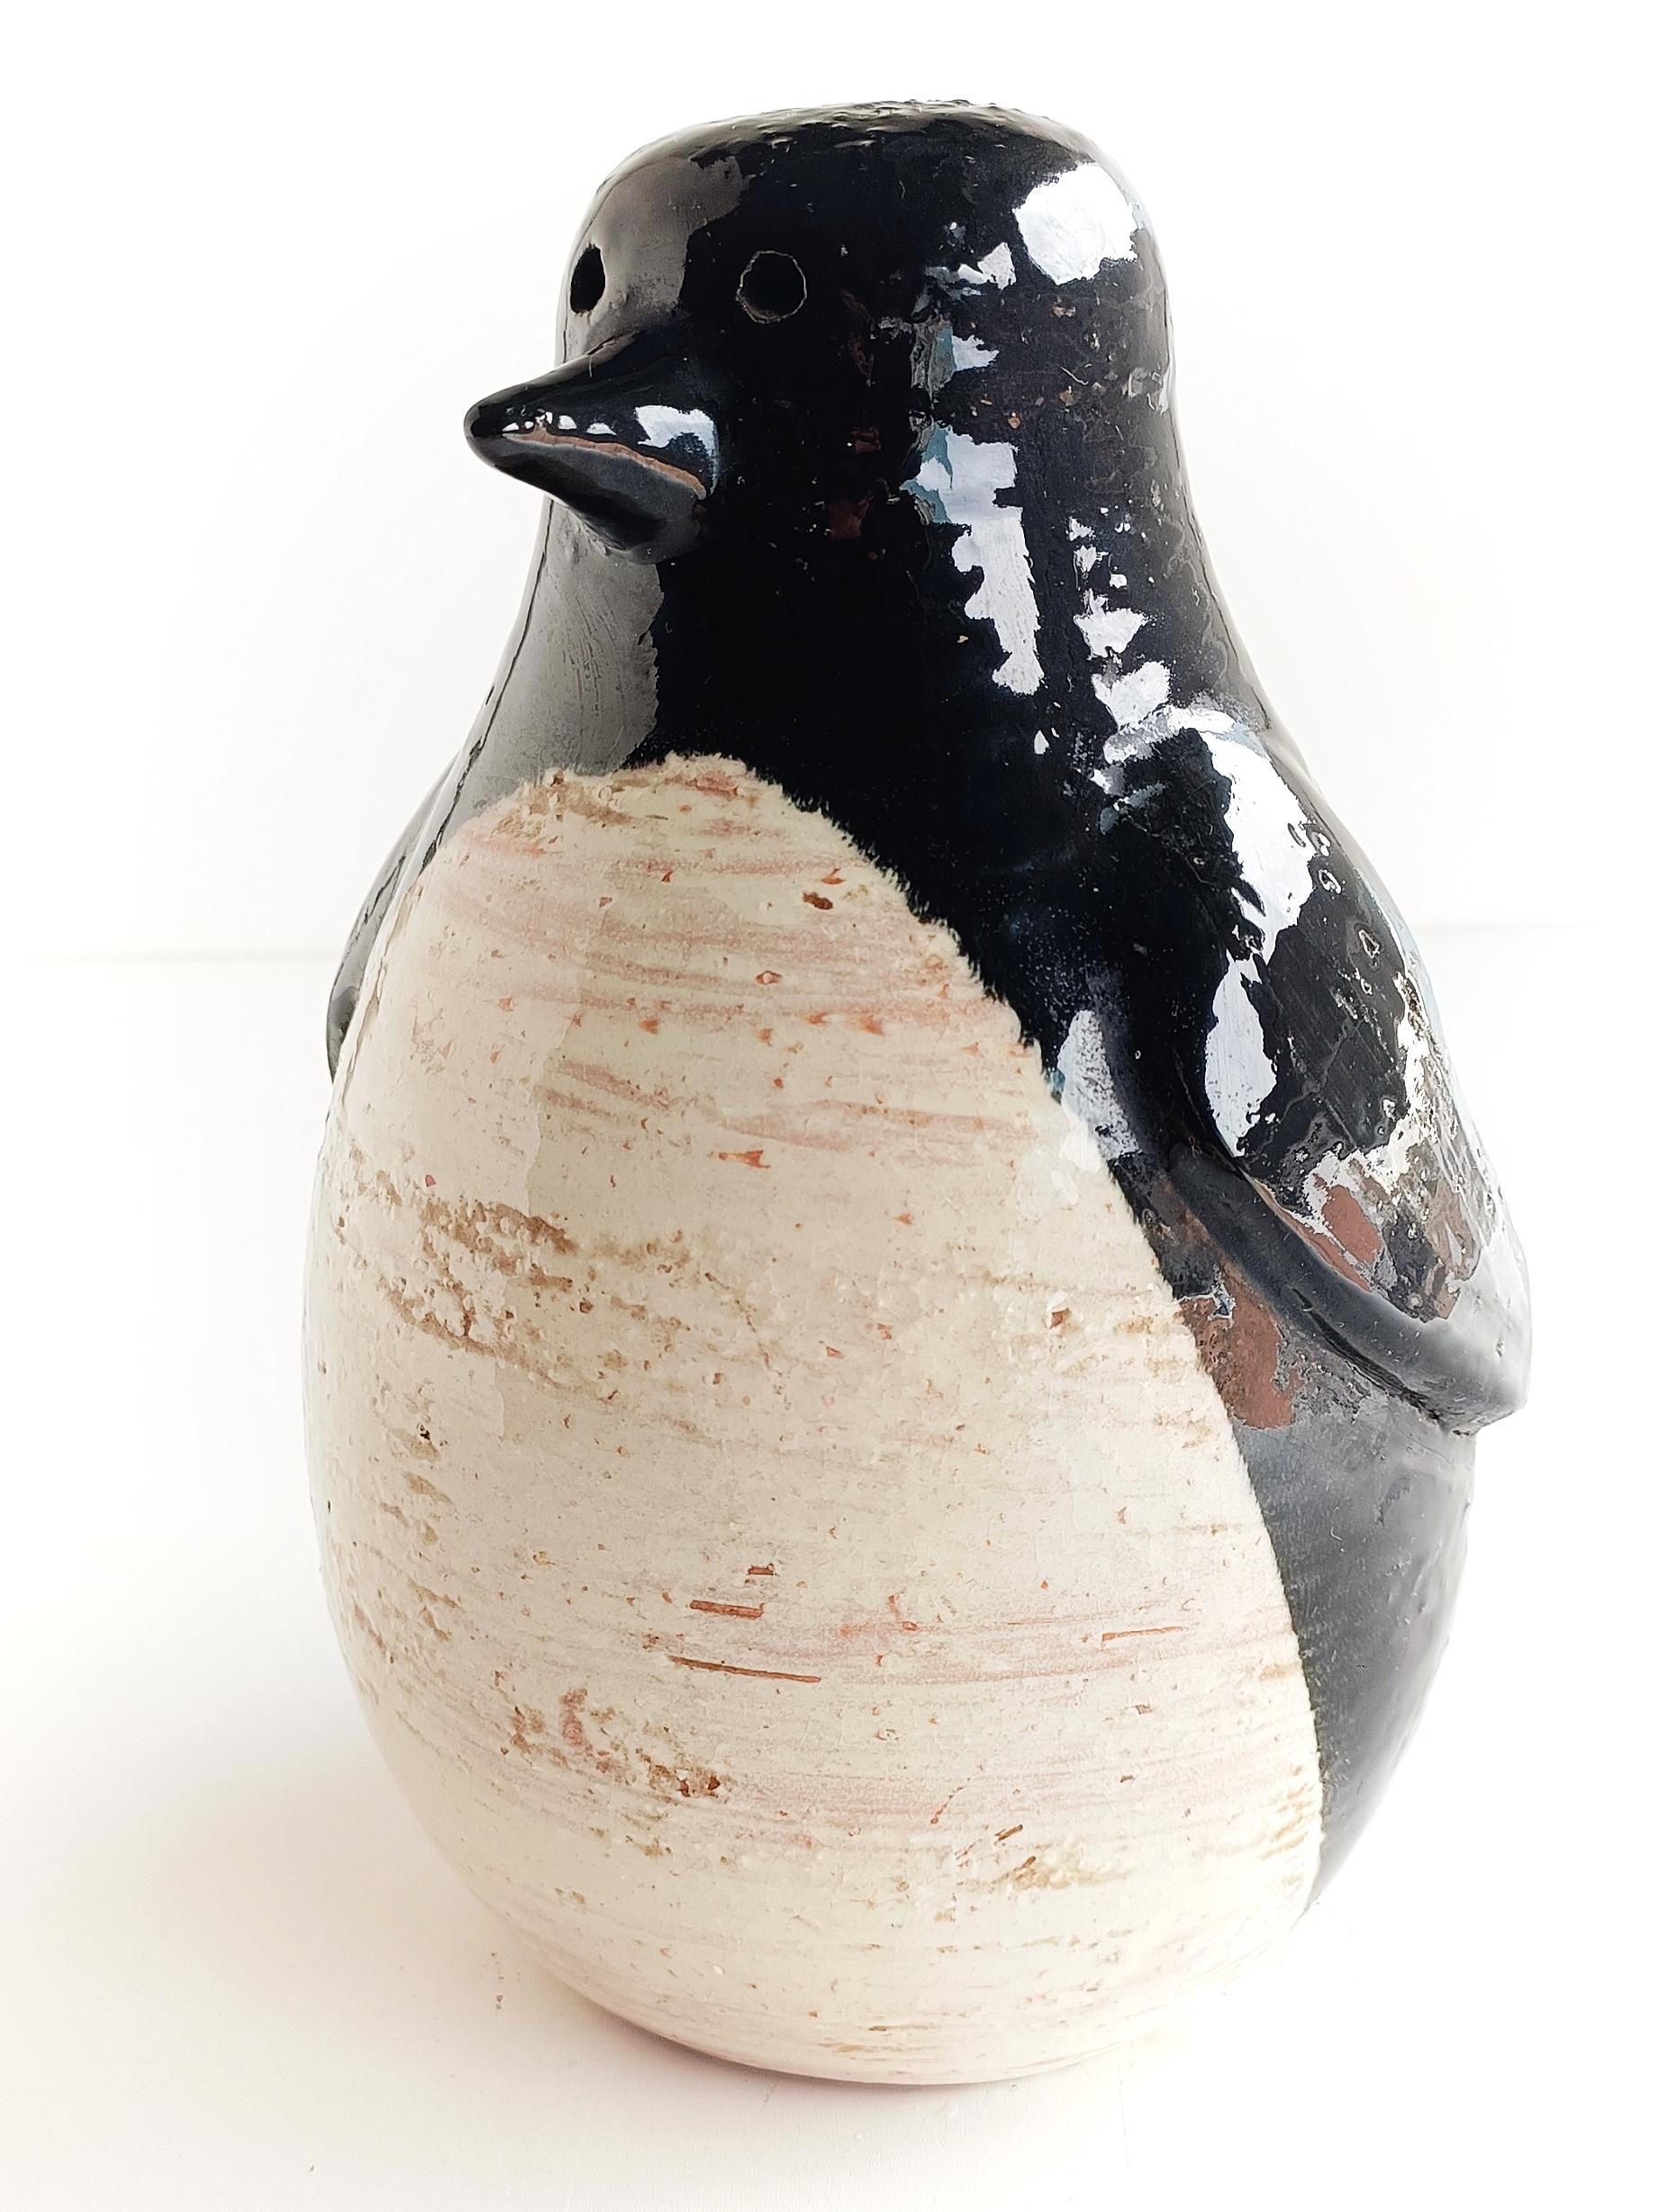 Glazed Large Bitossi by Aldo Londi Ceramic Penguin, Italy, 1960s